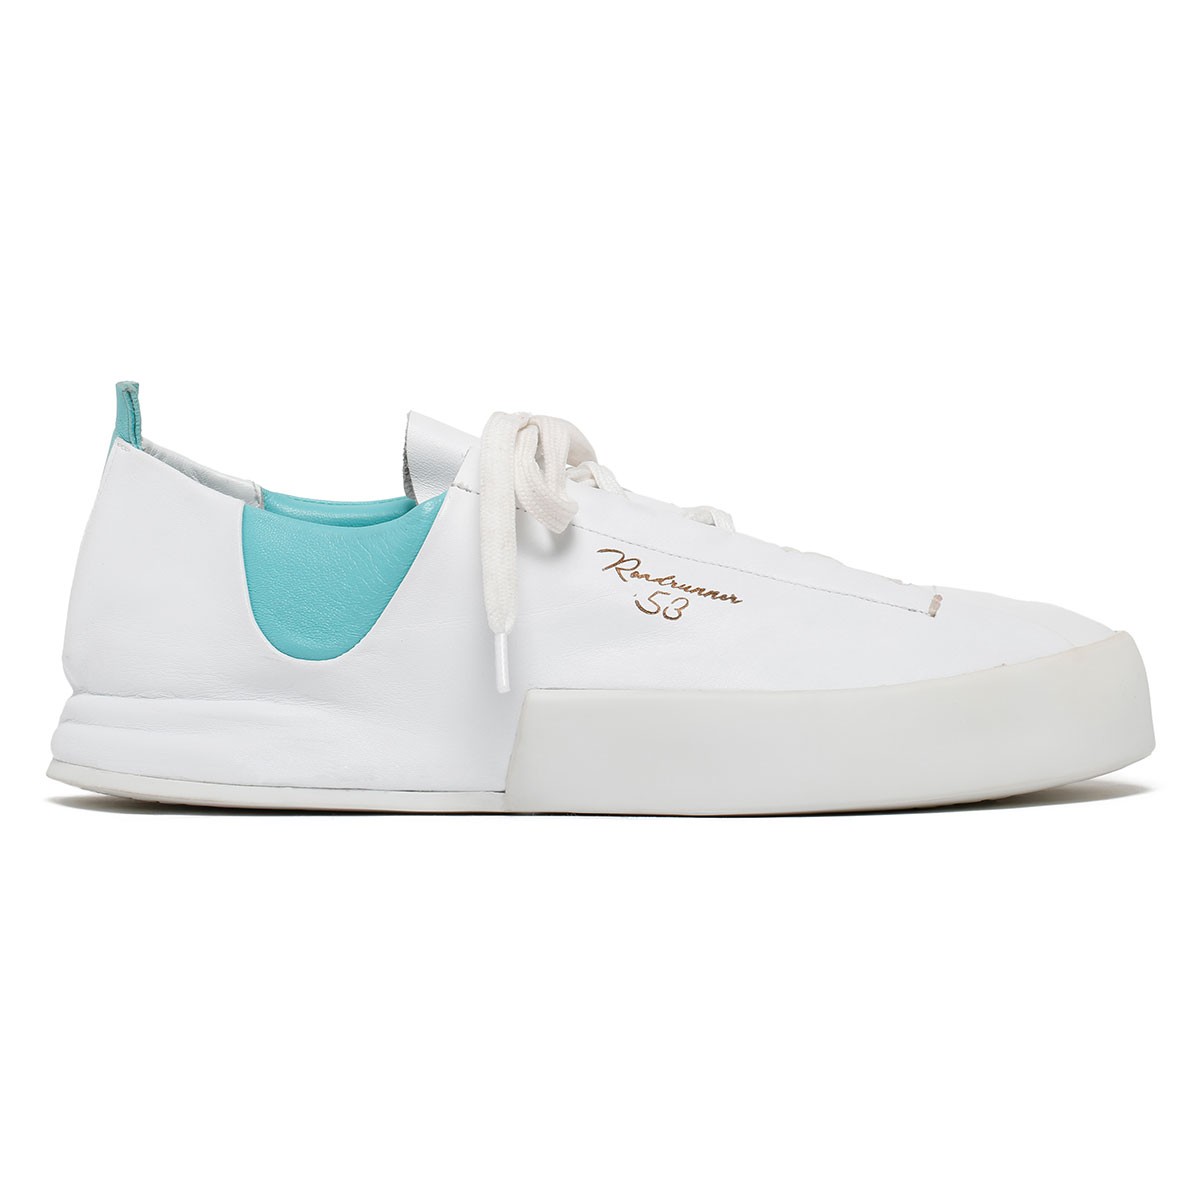 Fantoni white and aquamarine sneakers